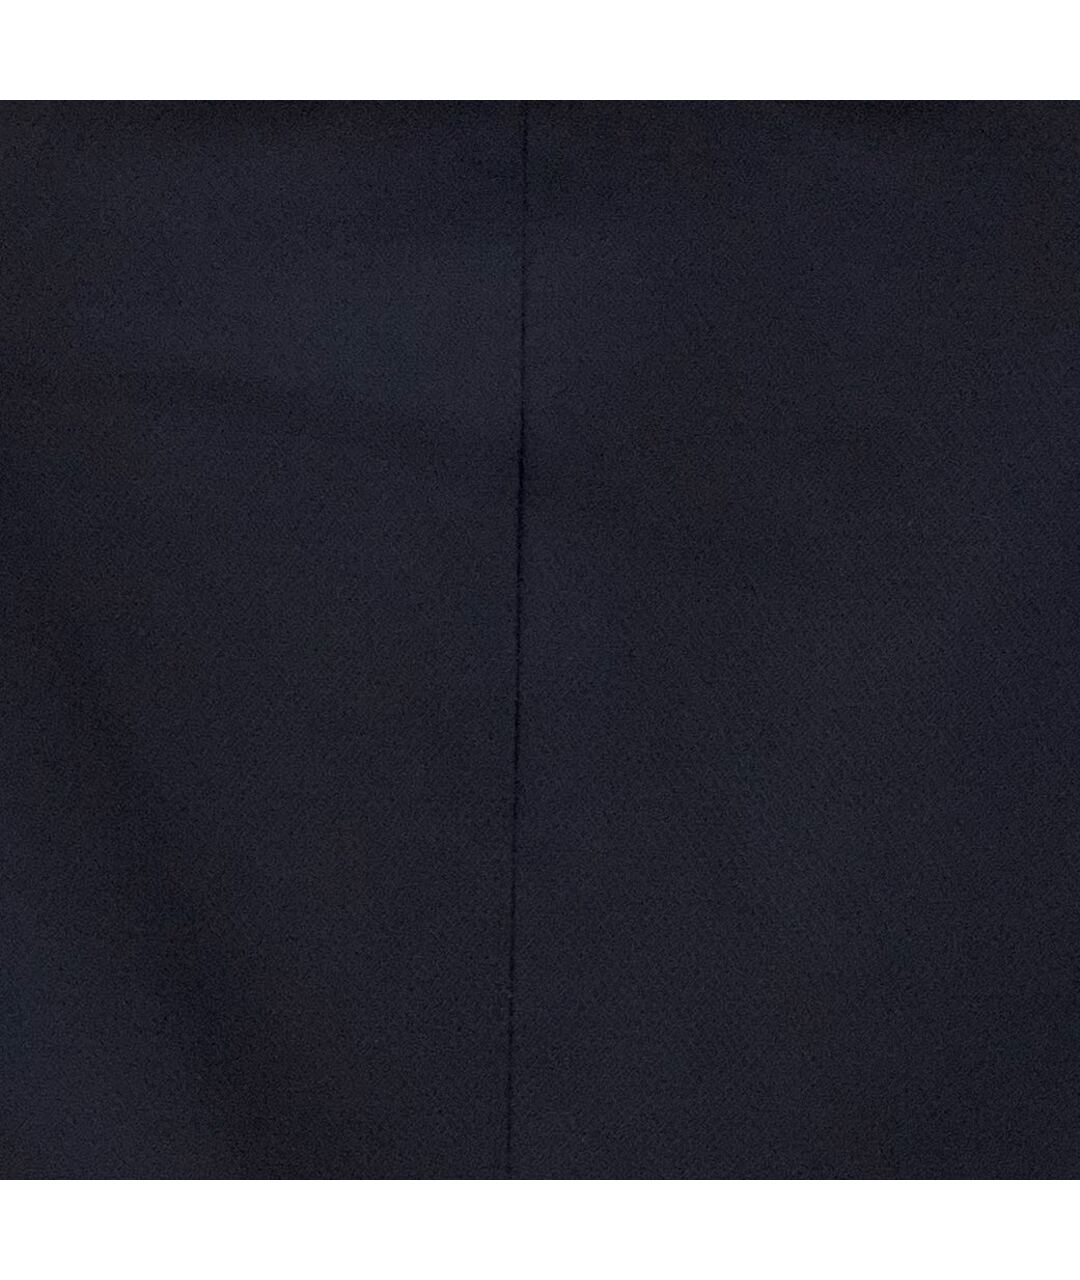 HUGO BOSS Темно-синий шерстяной костюм с брюками, фото 4